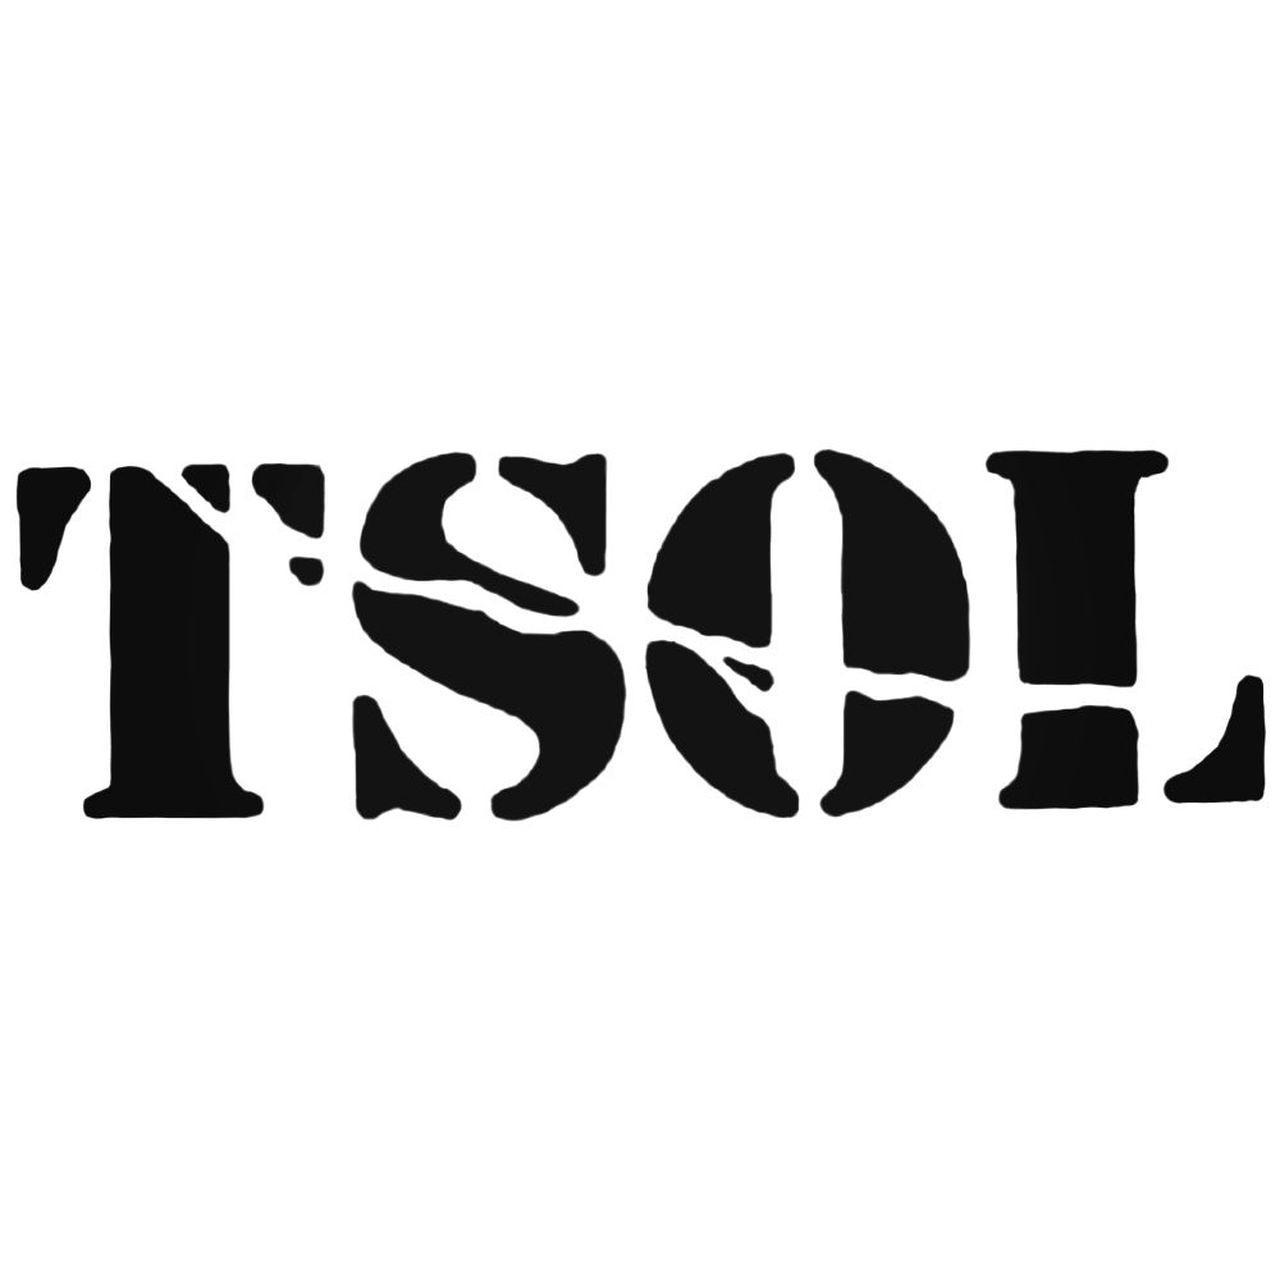 Tsol Logo - Tsol Band Decal Sticker